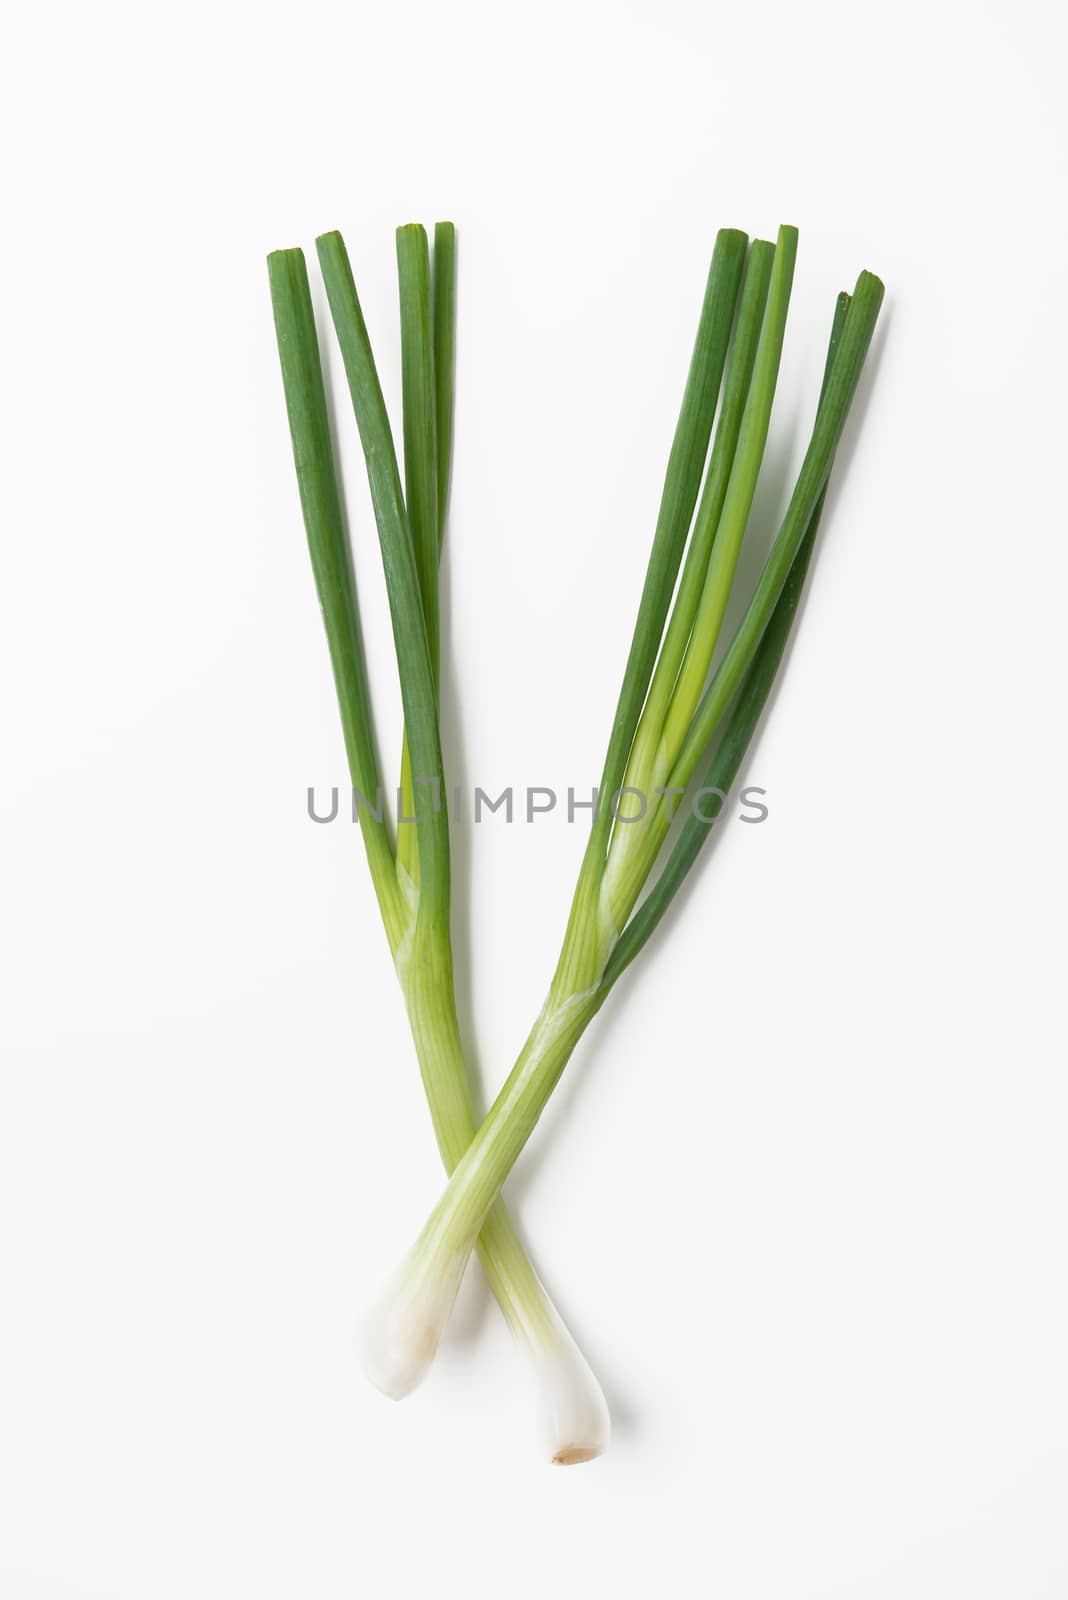 green onions by antpkr